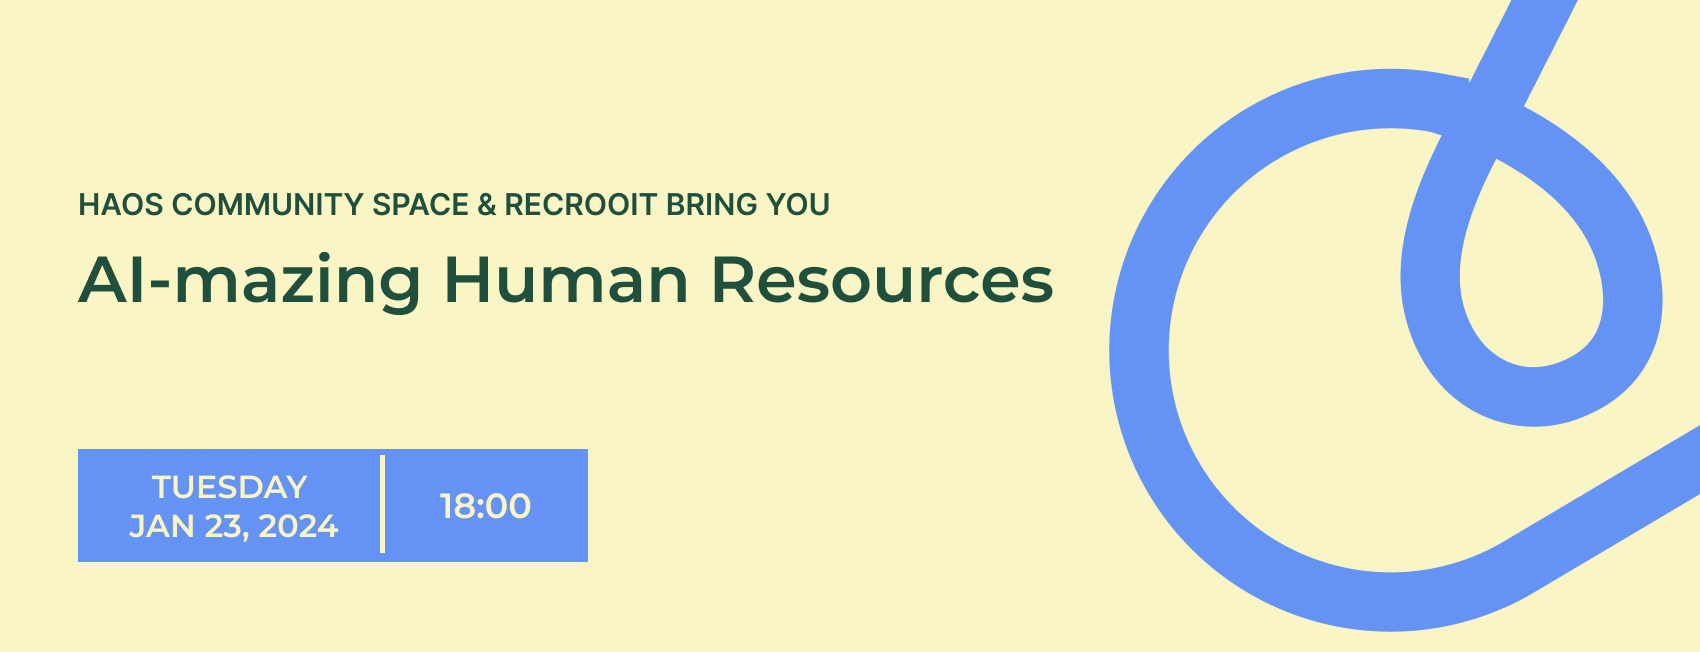 AI-mazing Human Resources